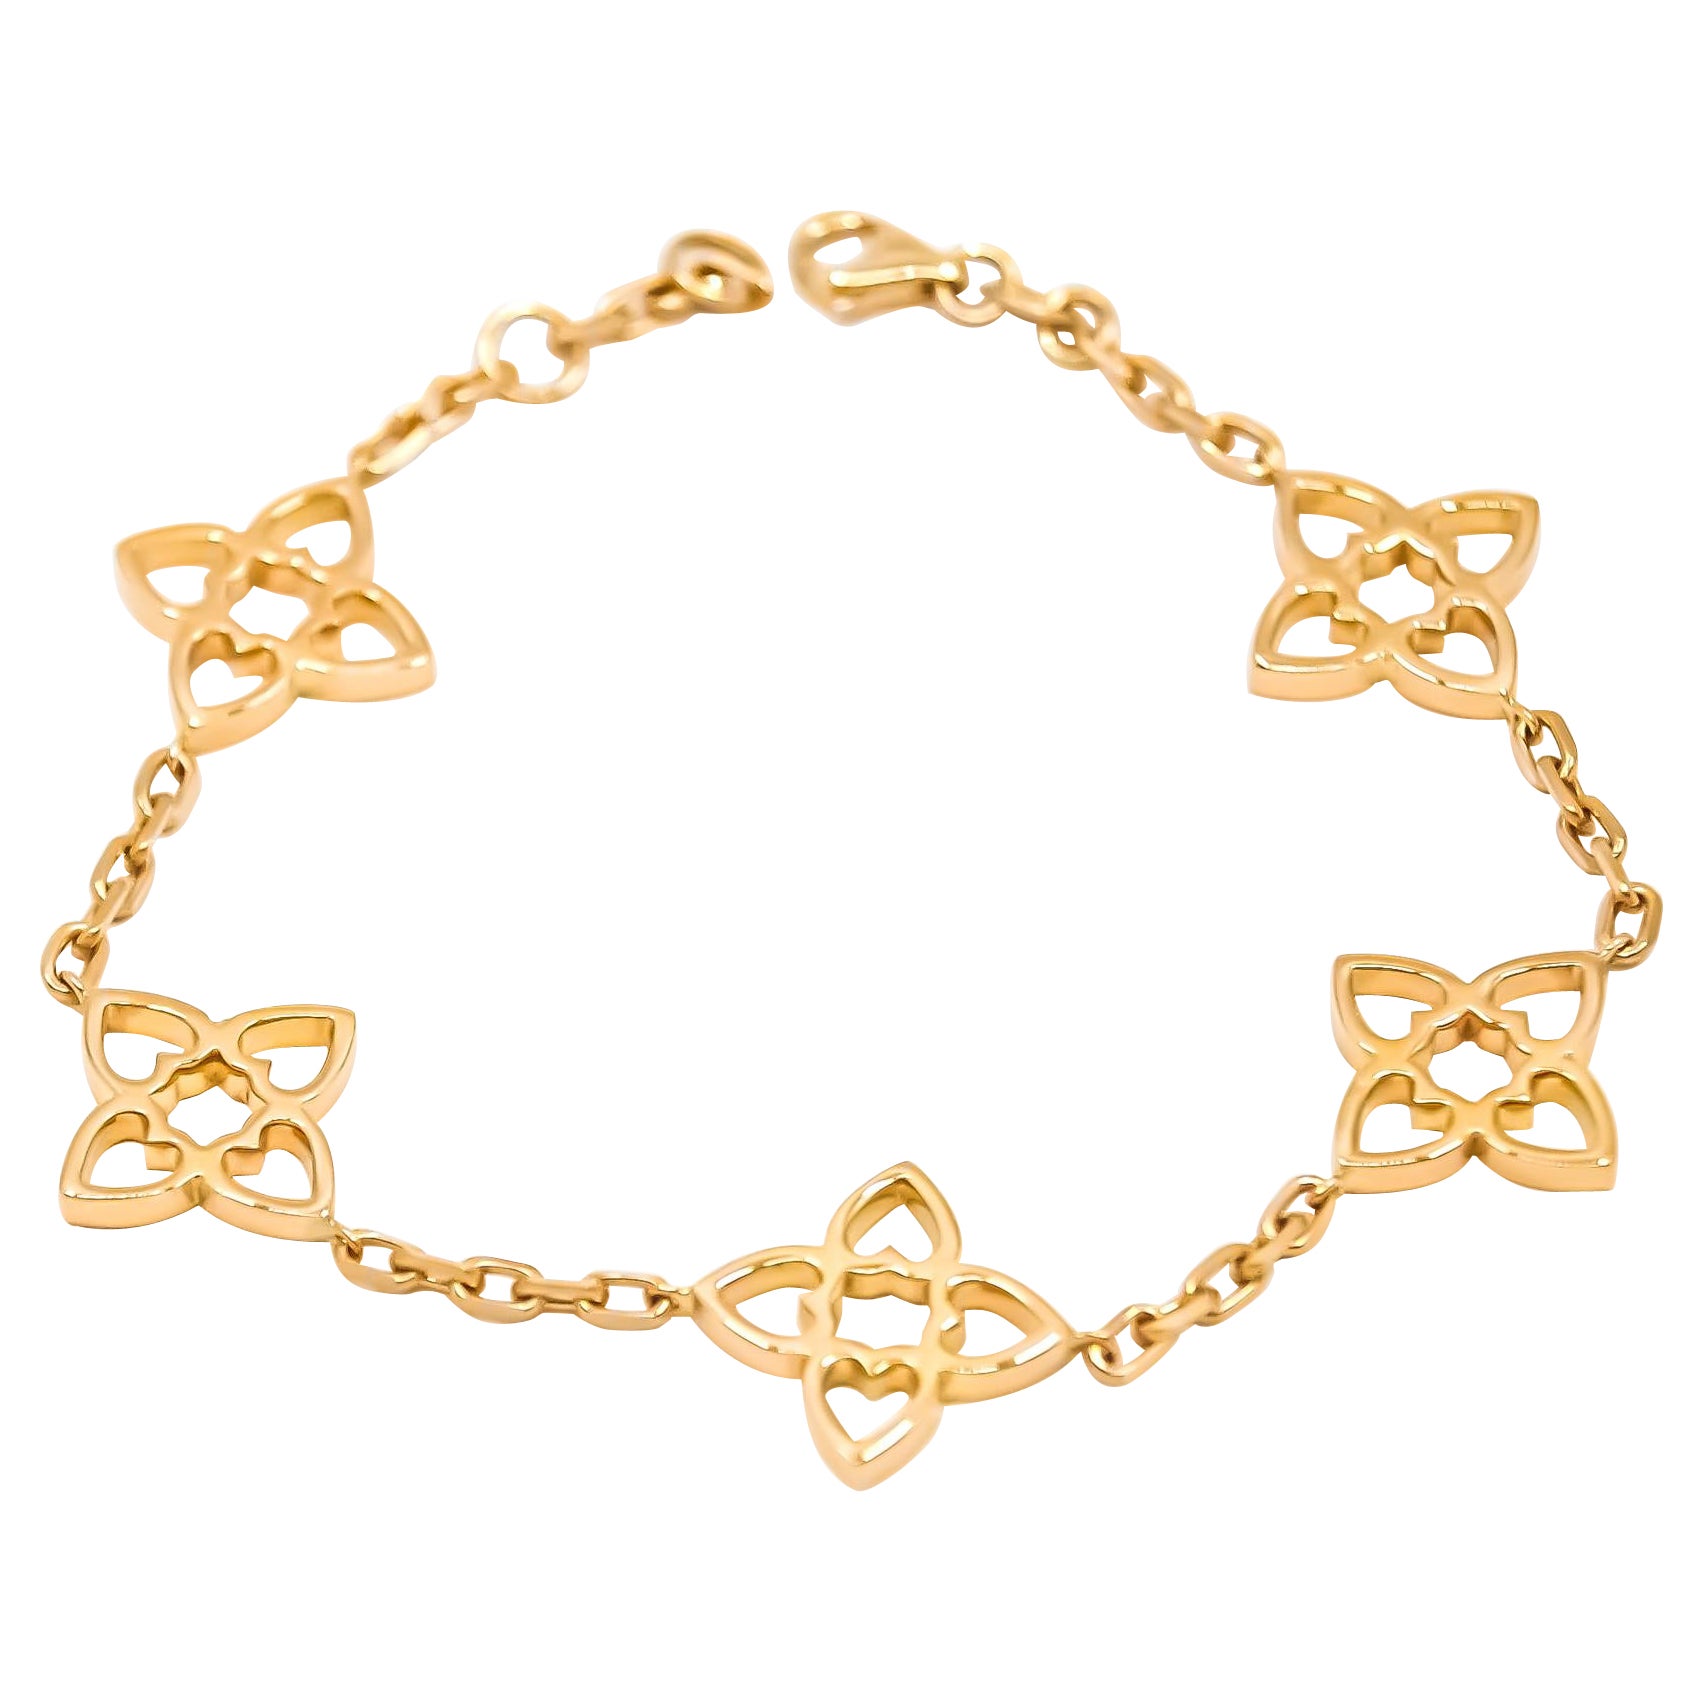 Connected Hearts Five Motif Bracelet in 18kt Gold For Sale